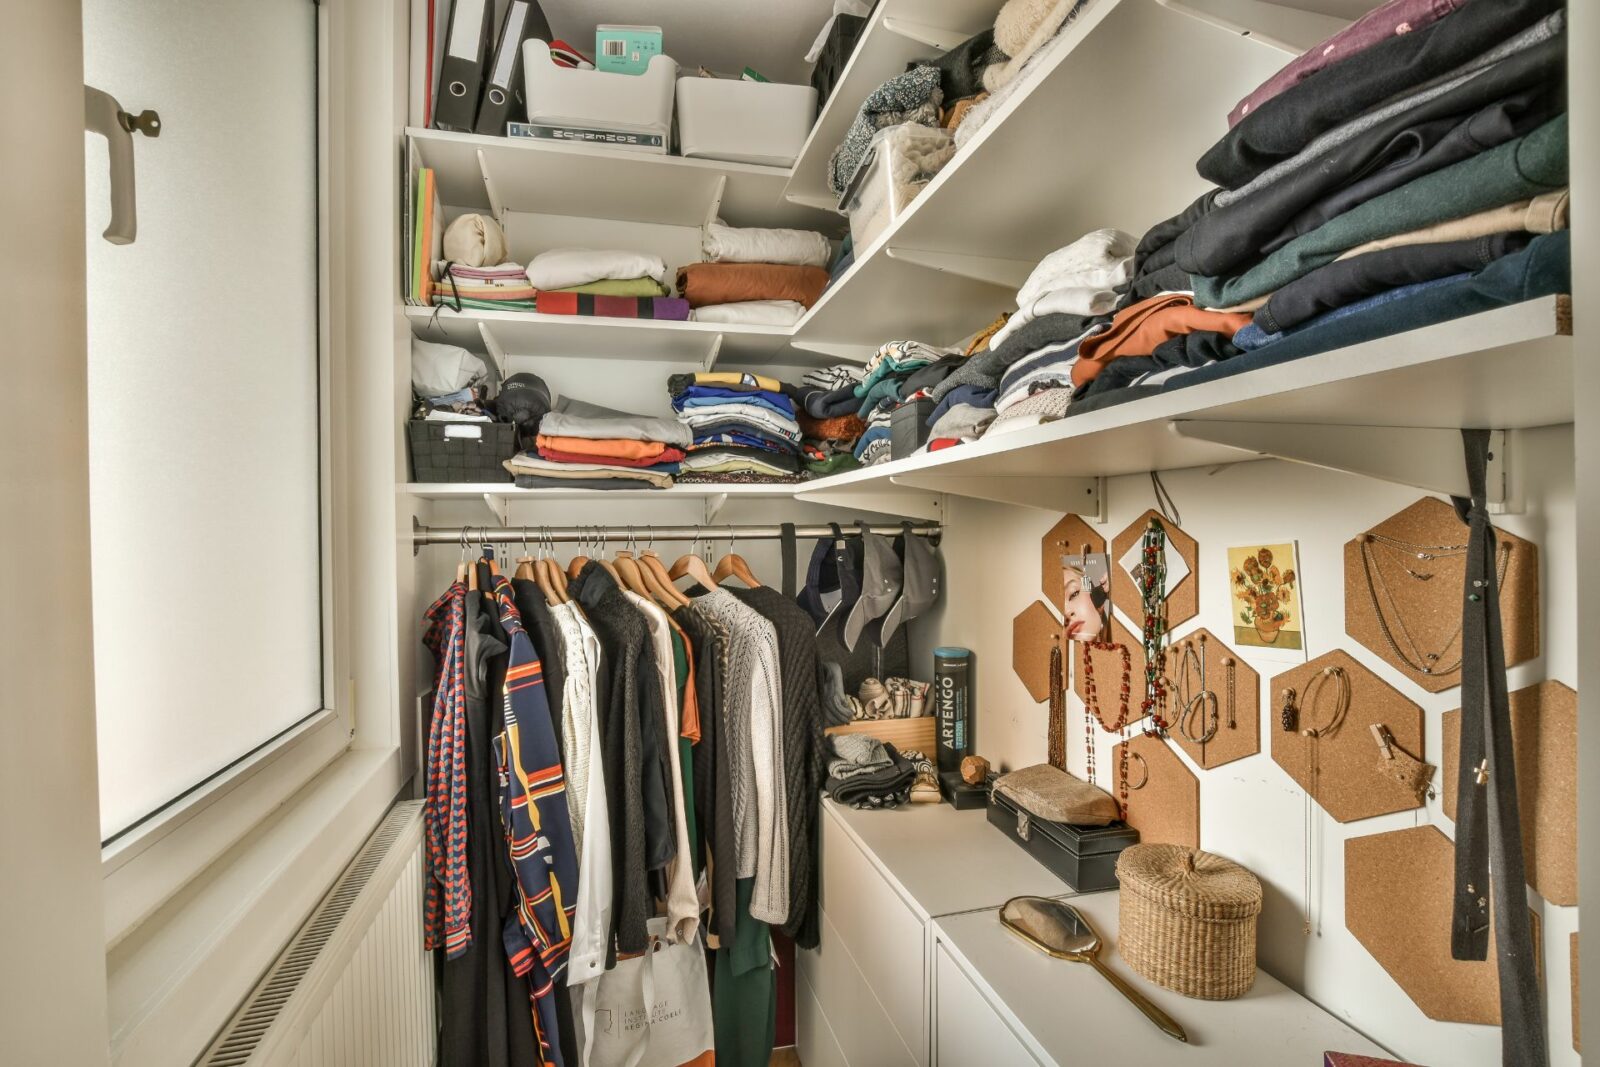 small closets design ideas